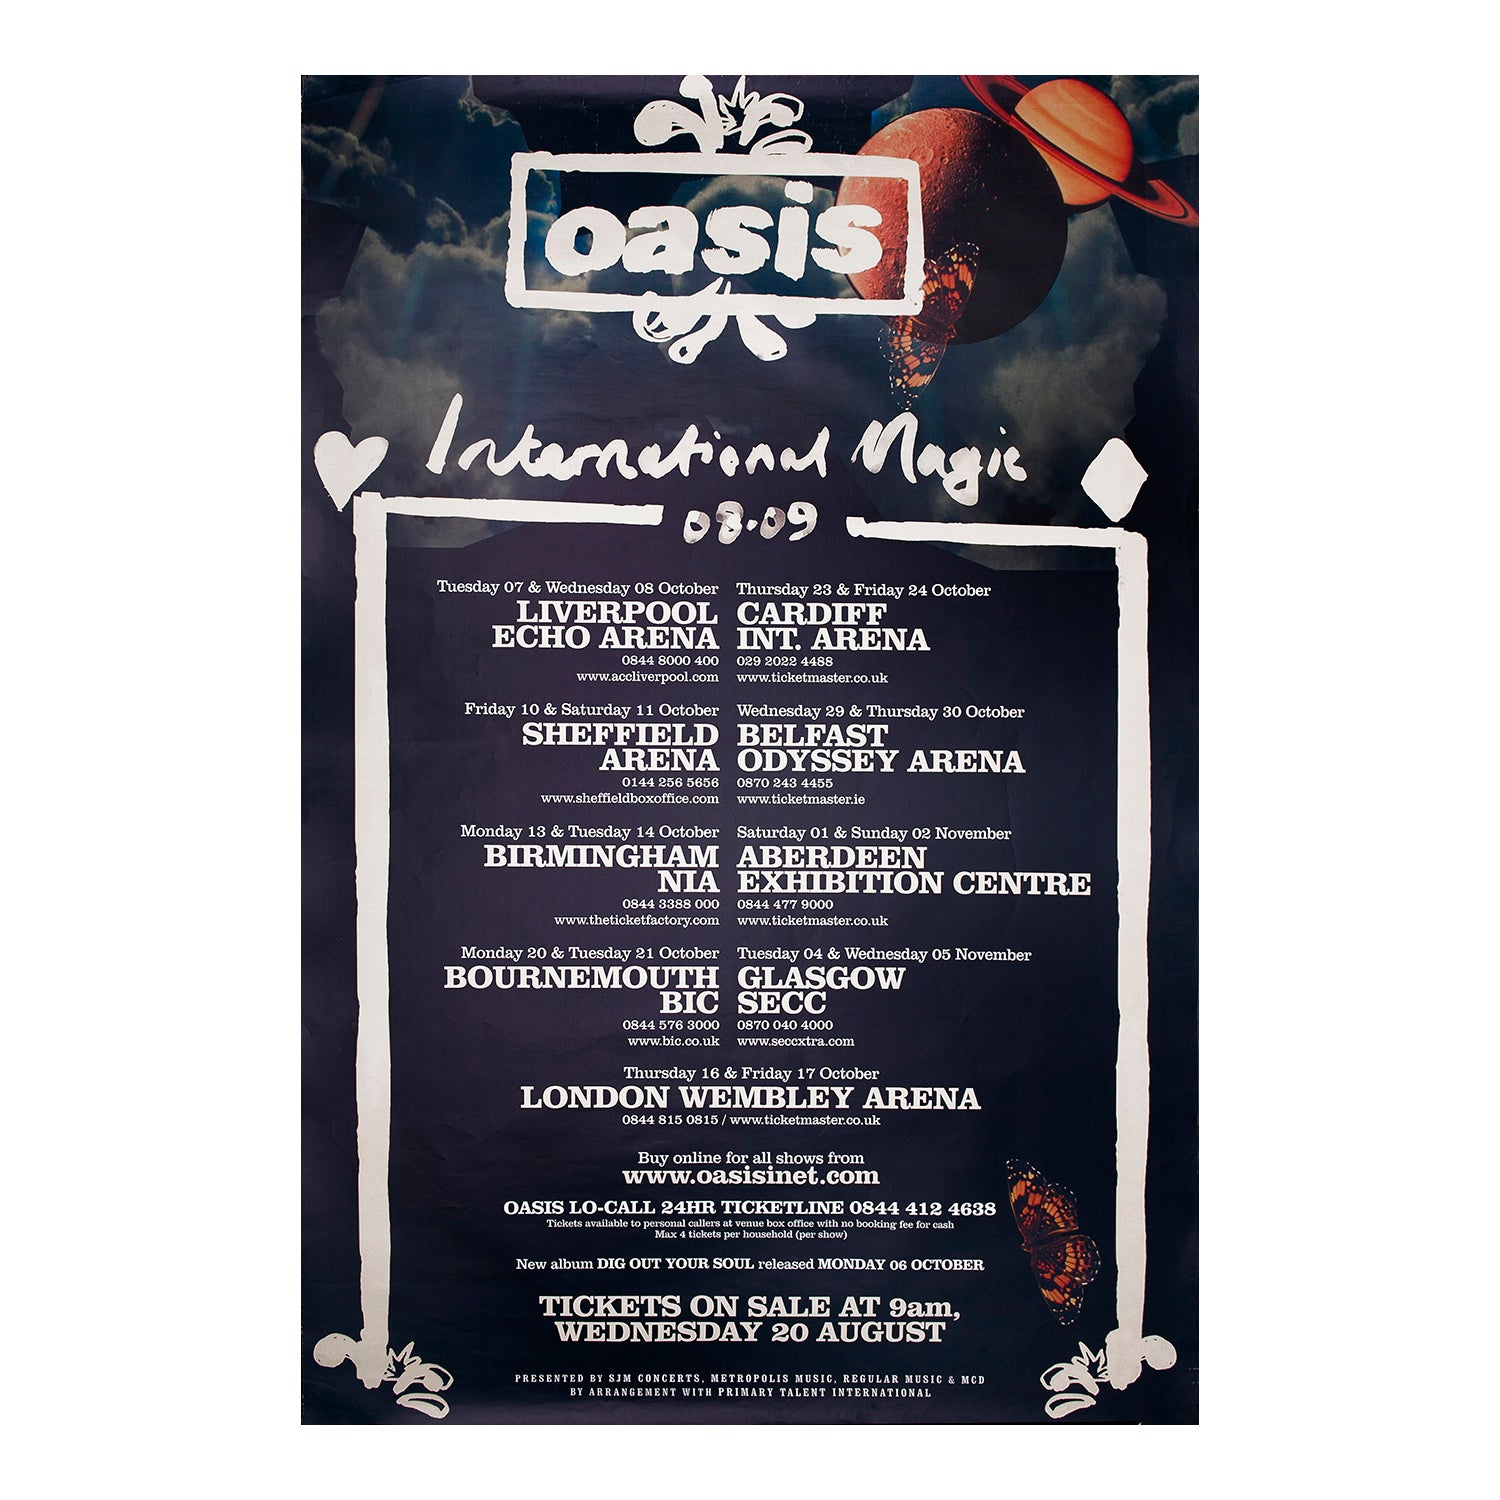 Oasis. International Magic